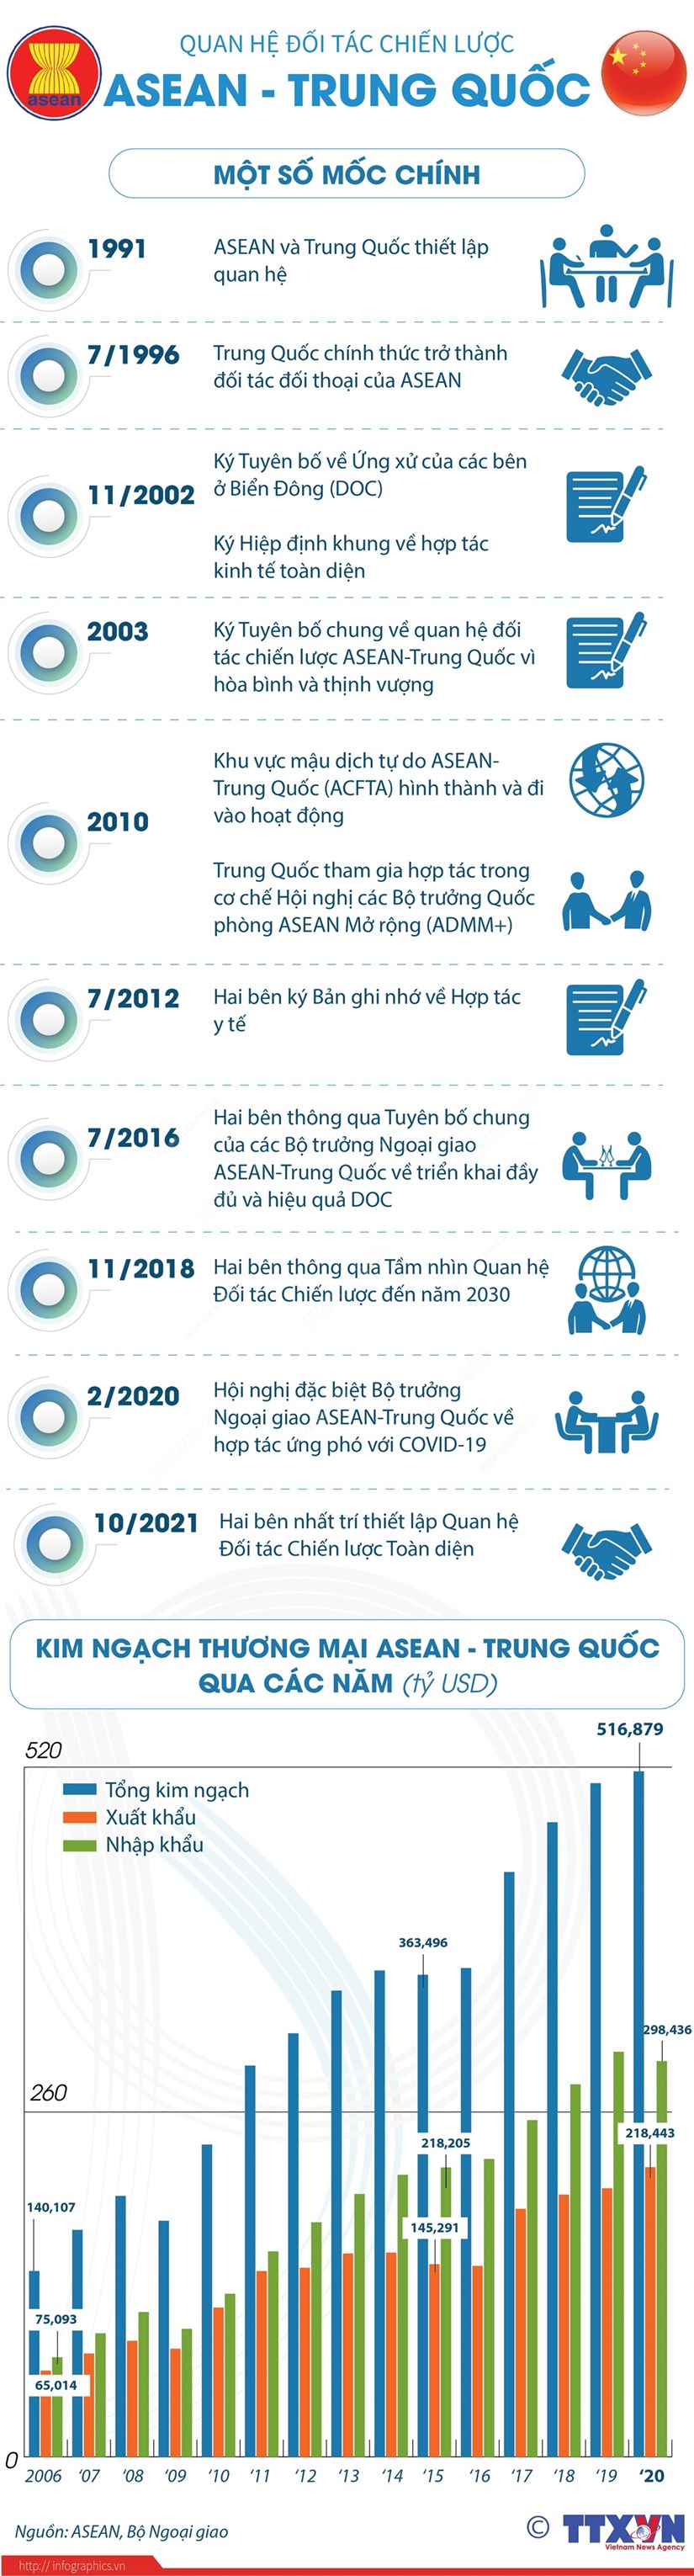 [Infographics] Quan he doi tac chien luoc ASEAN-Trung Quoc hinh anh 1